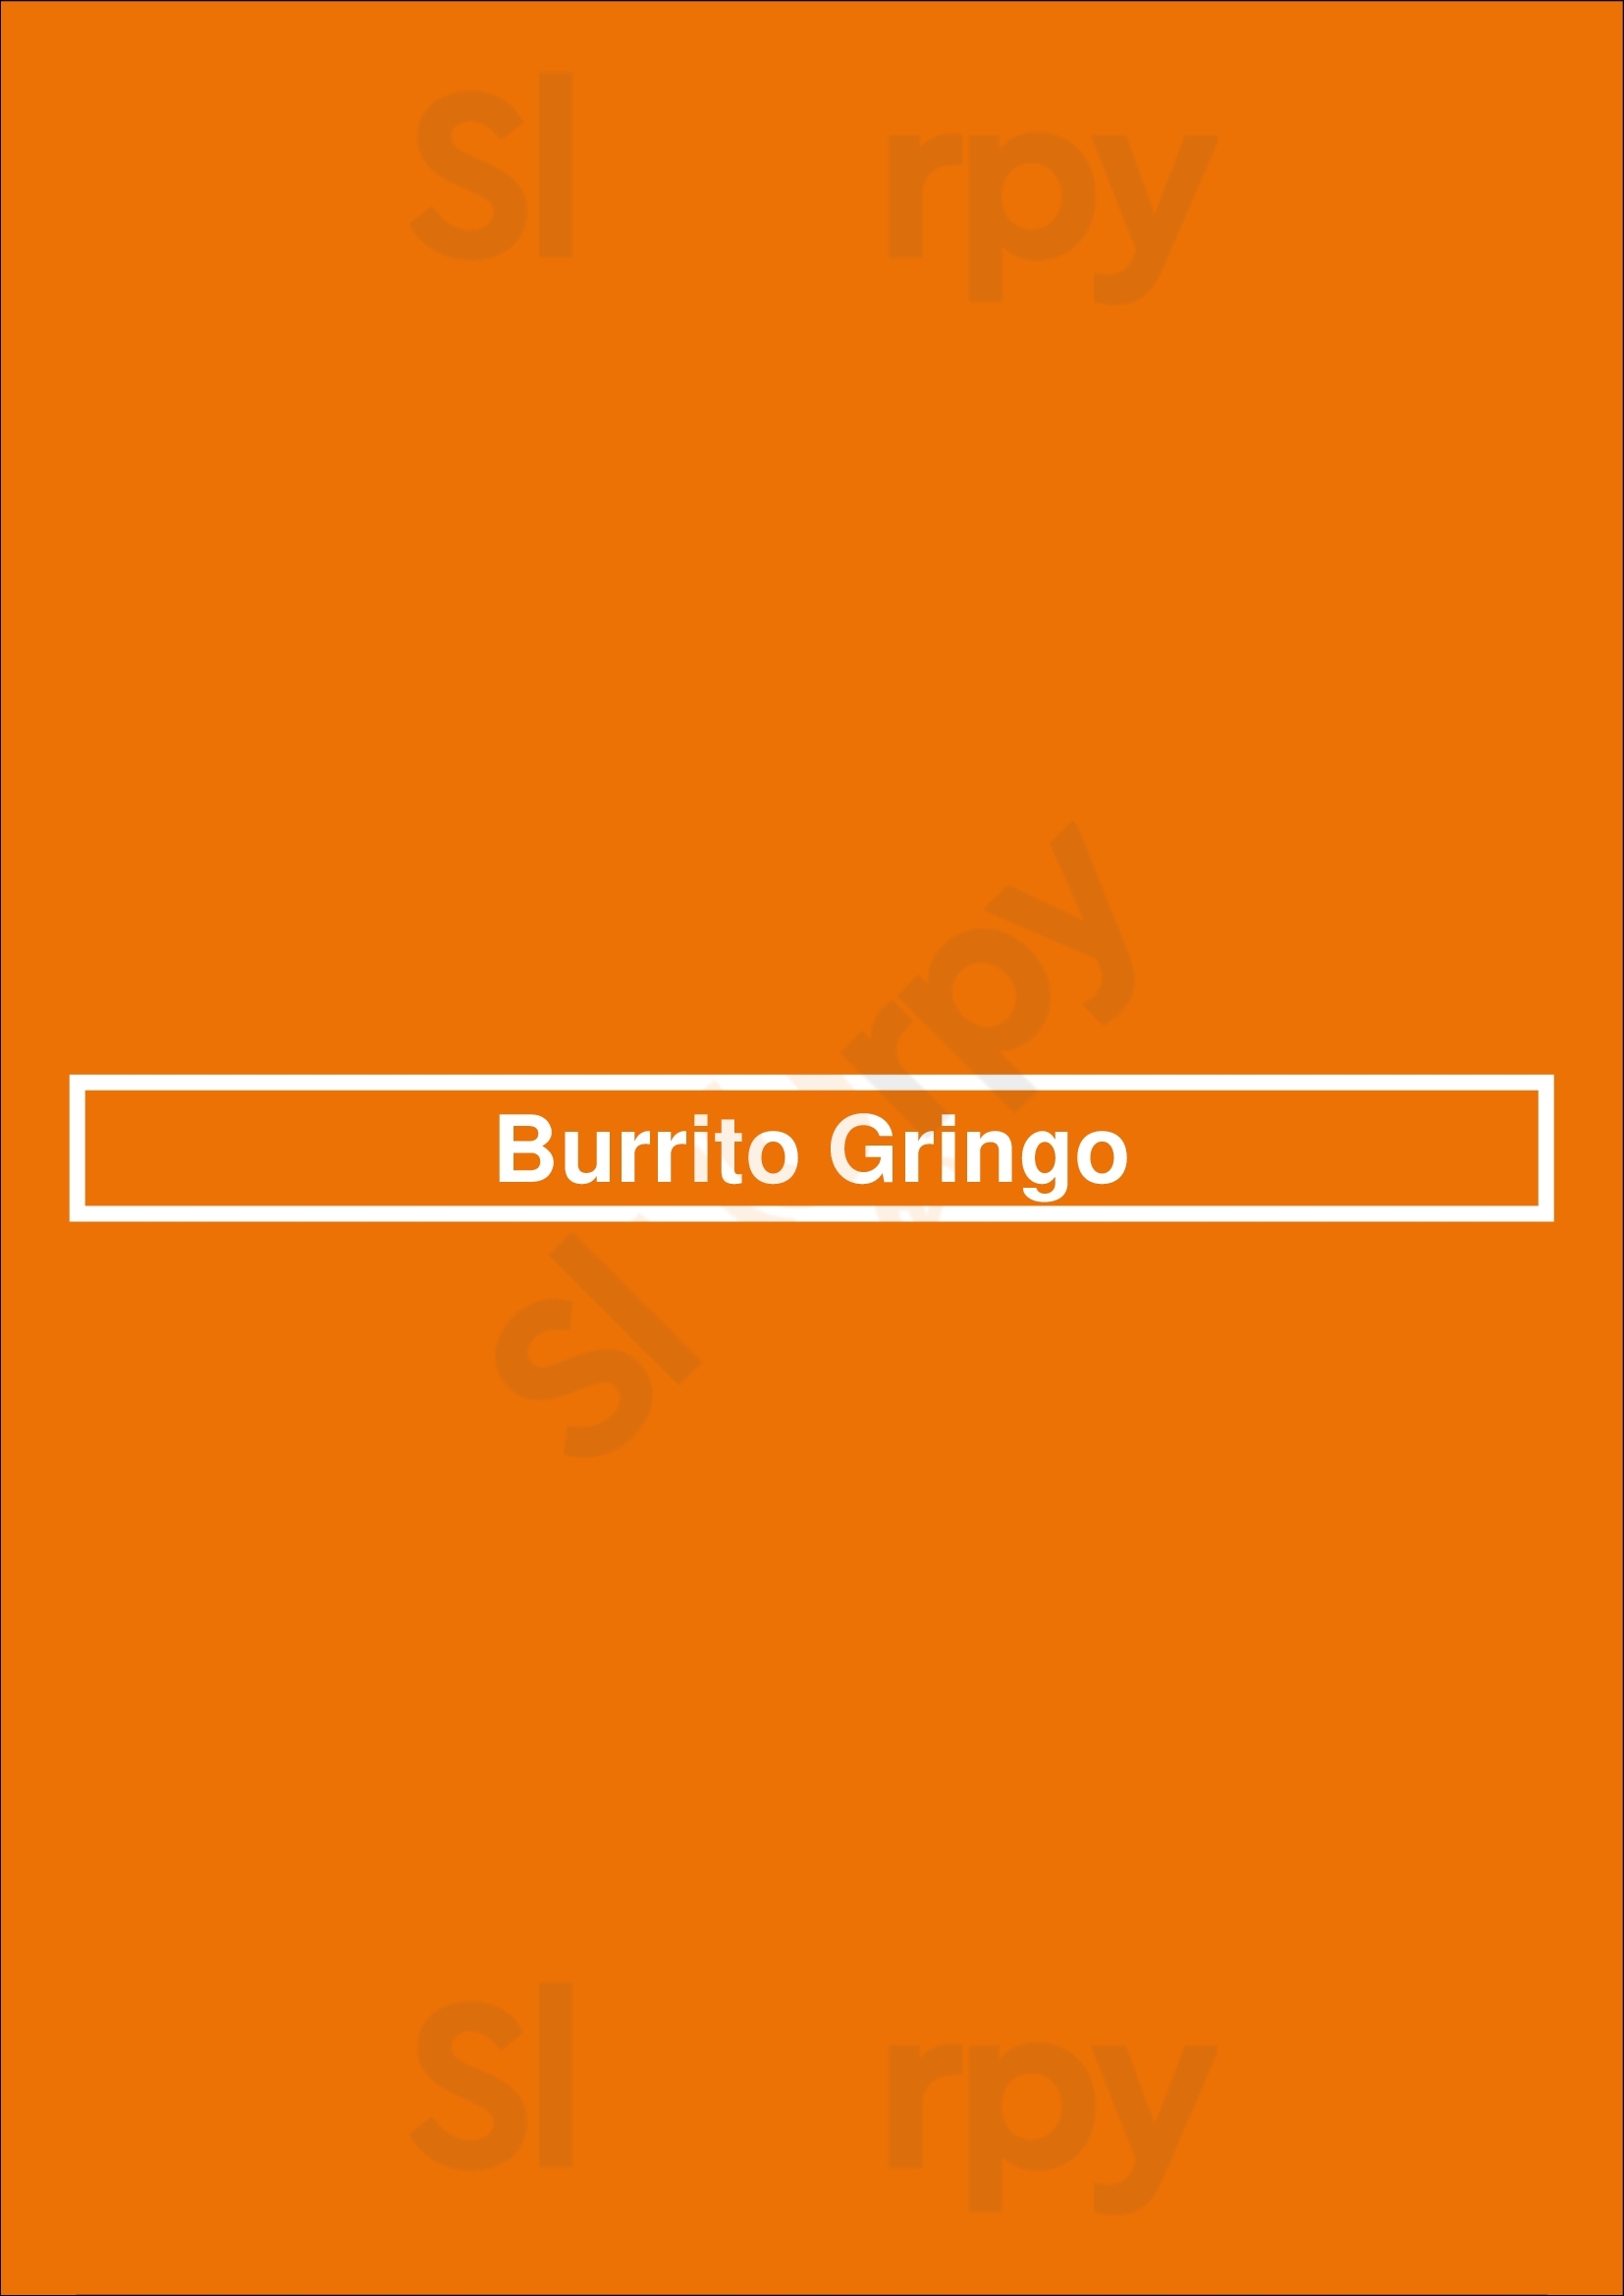 Burrito Gringo Ottawa Menu - 1